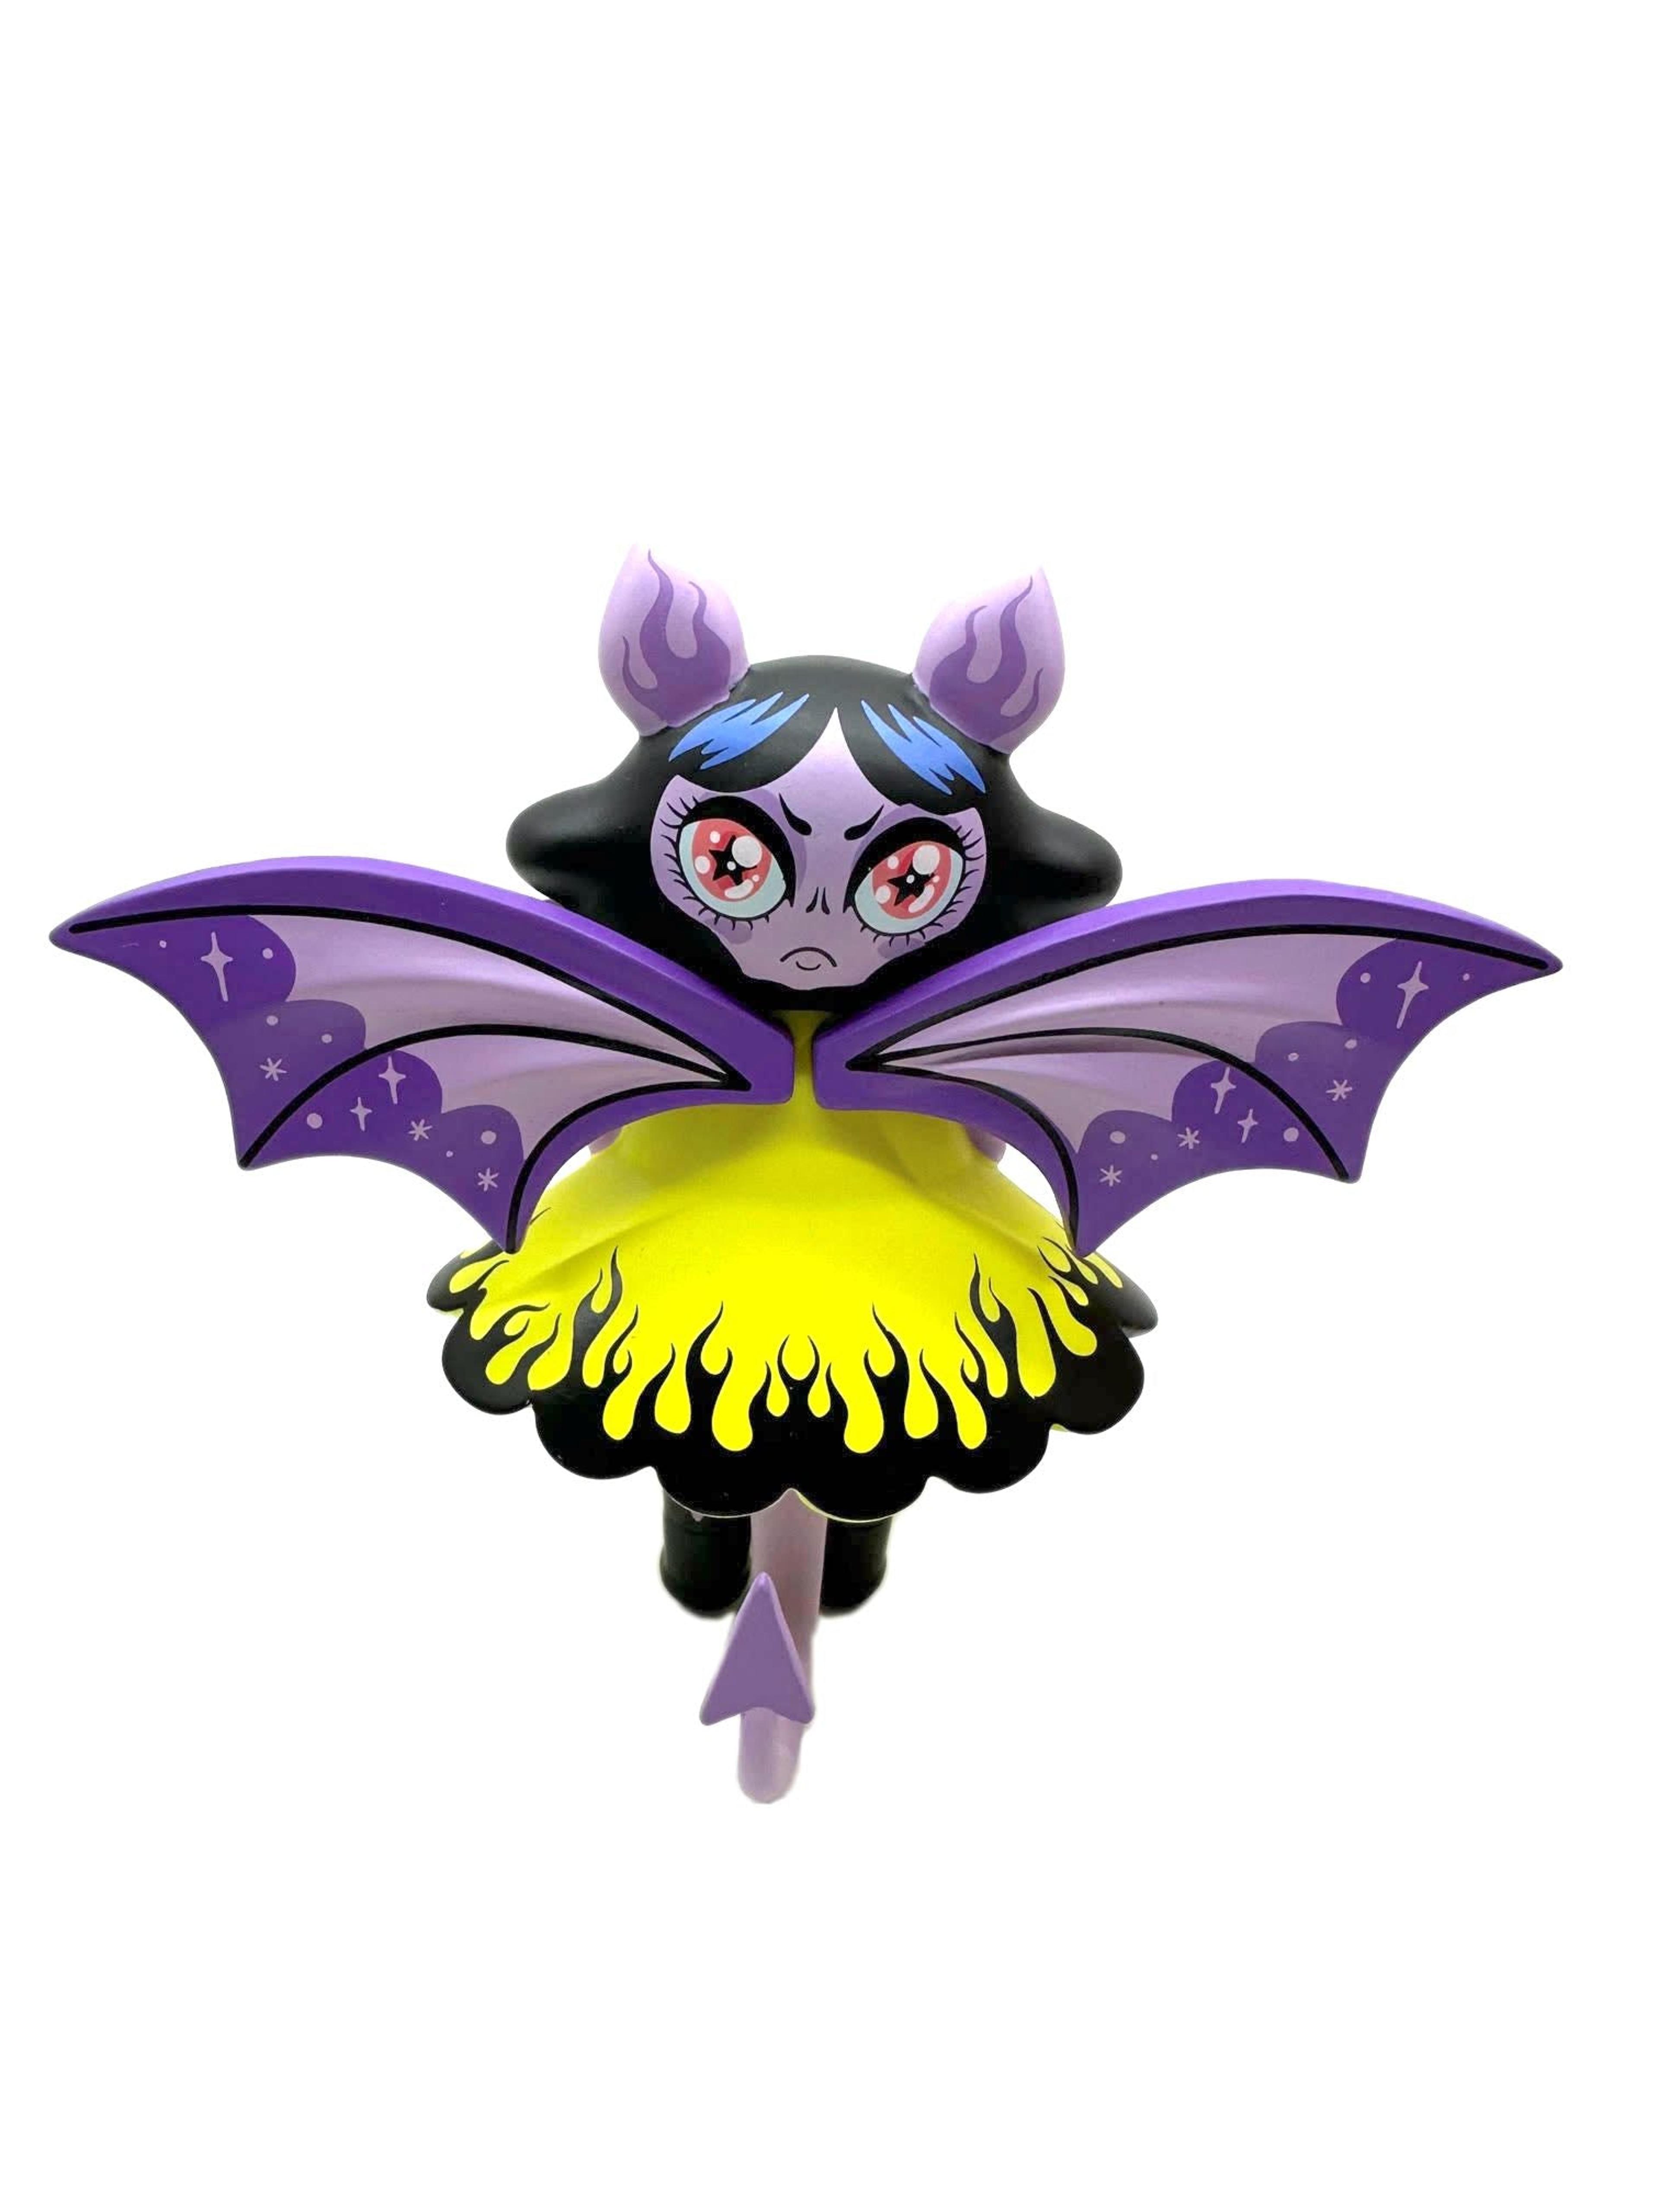 Alternate View 4 of Demon Child : Midnight Moon Bat Series 2  by  Lillipore x Nightl